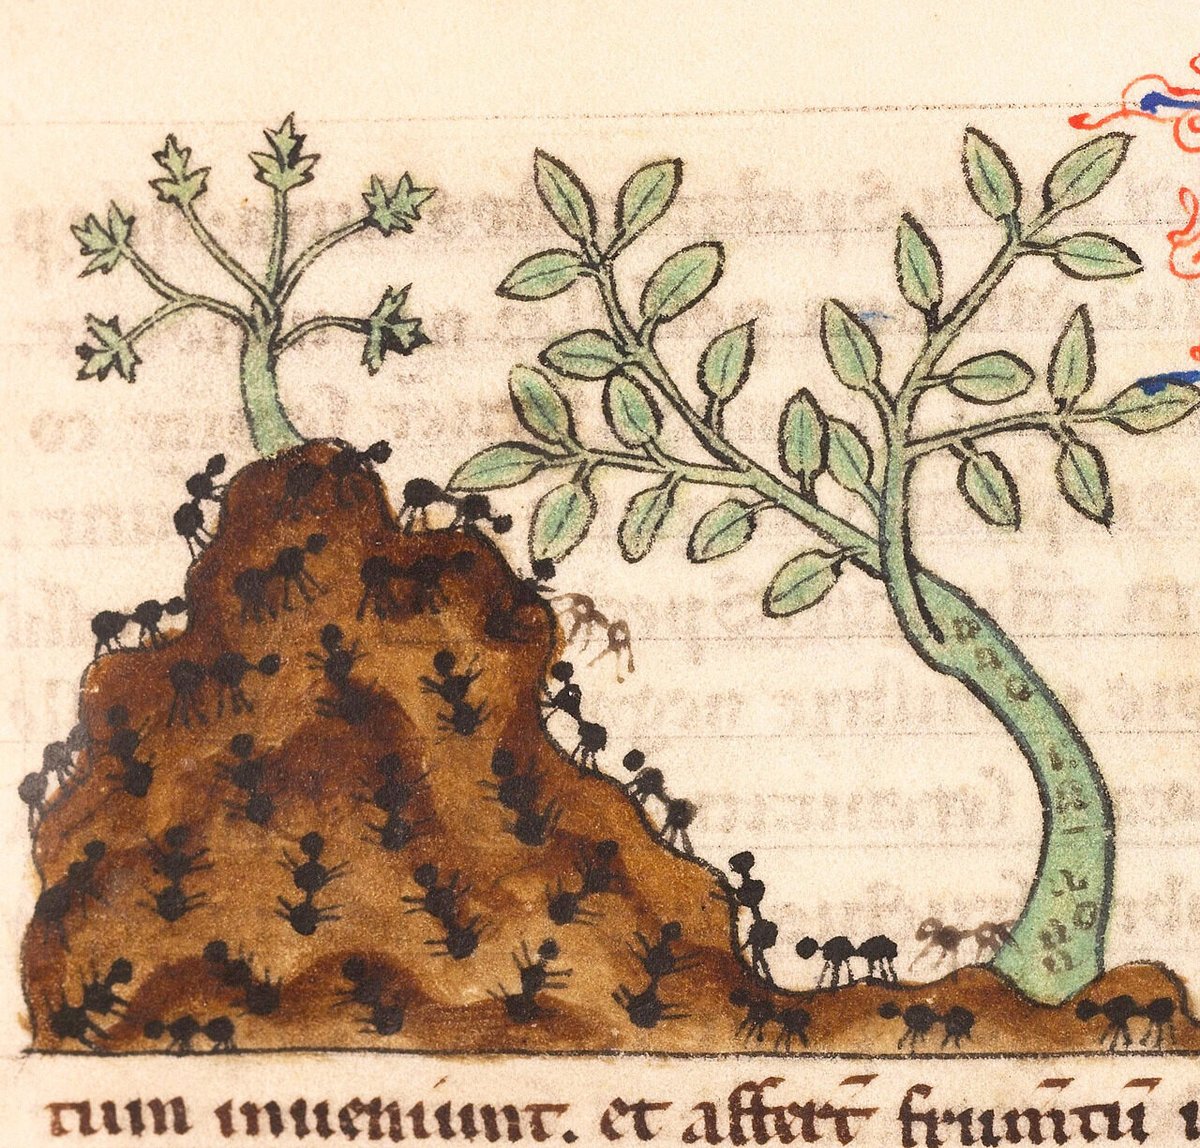 Ants. De Natura animalium, Cambrai ca. 1270. Collection: Douai, Bibliothèque municipale, ms. 711, fol. 24r